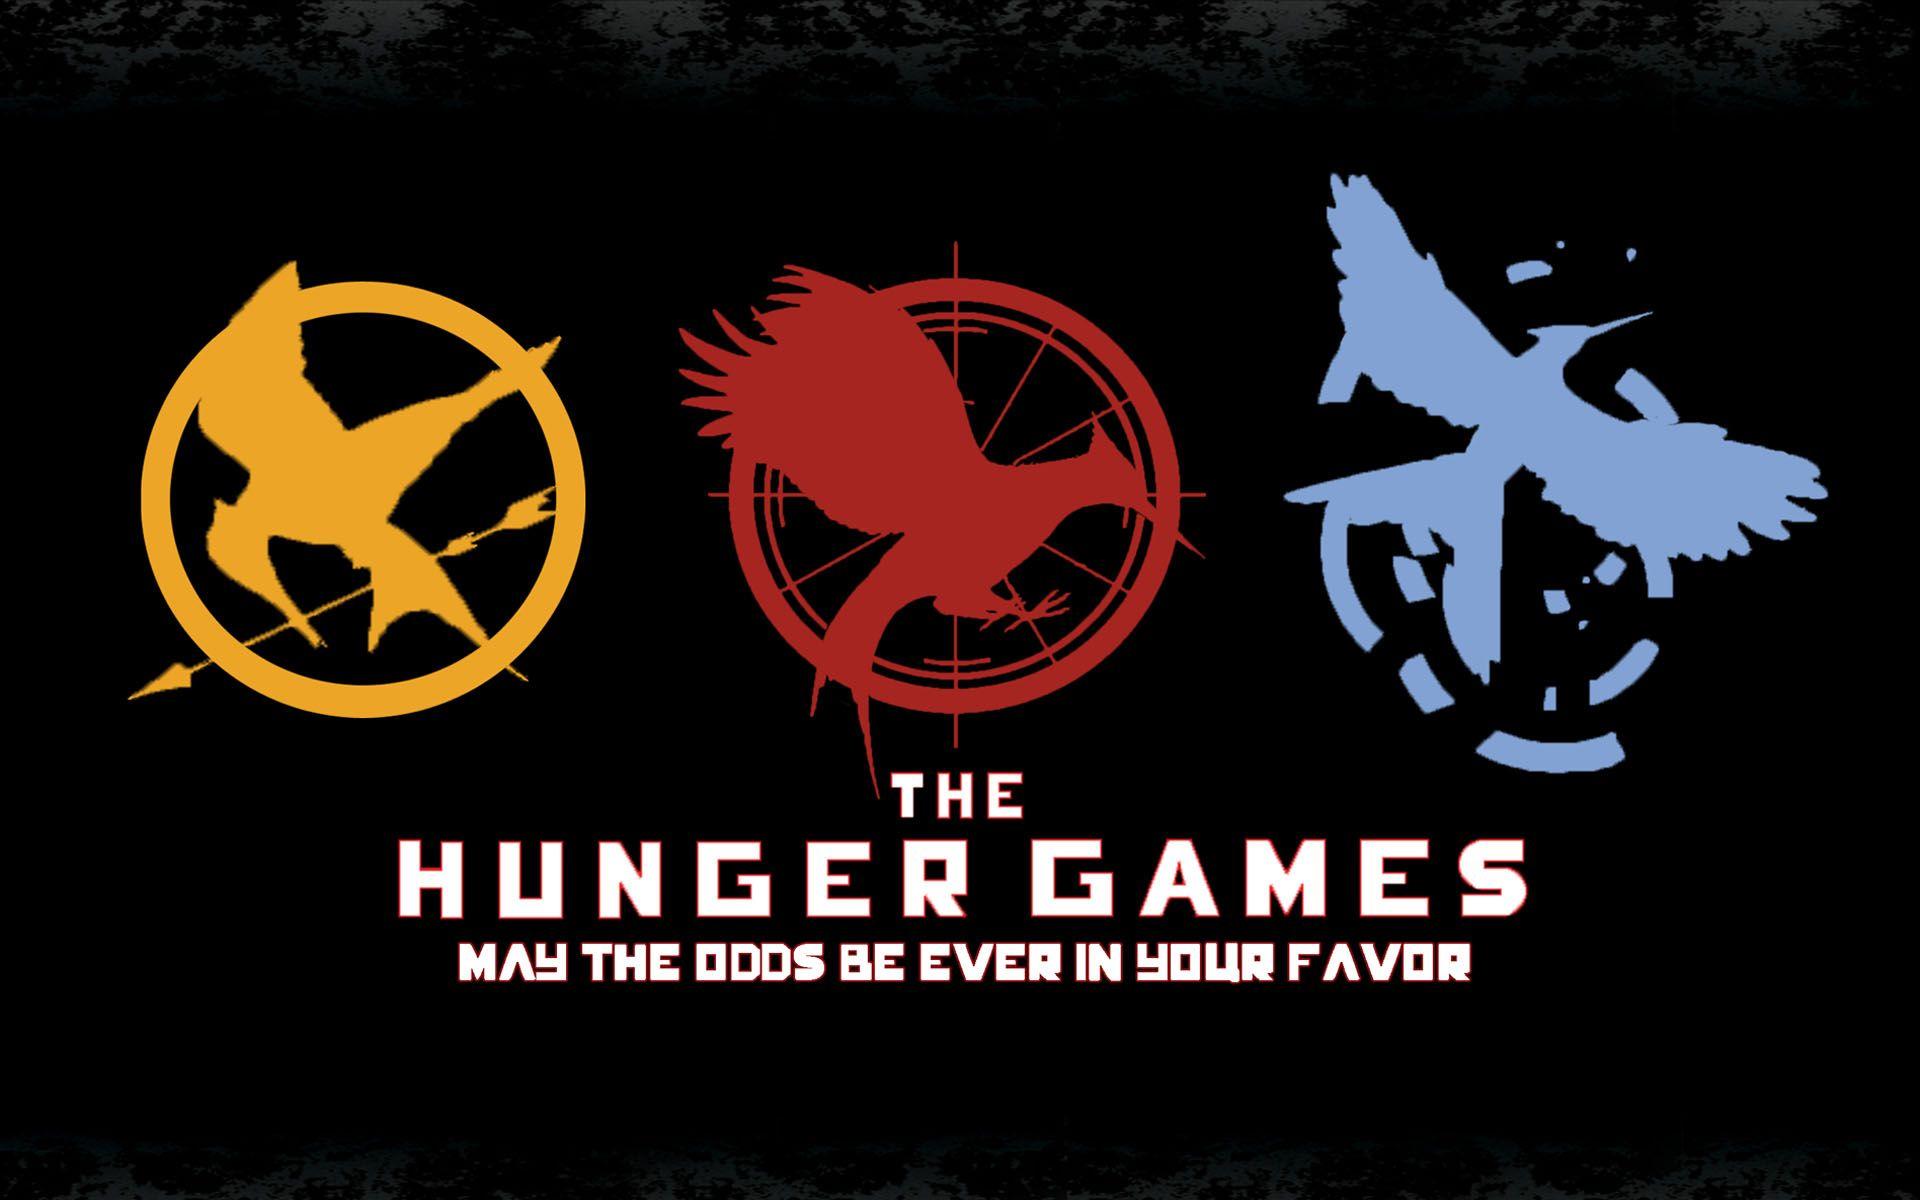 The Hunger Games Logos wallpaper. The Hunger Games Logos stock